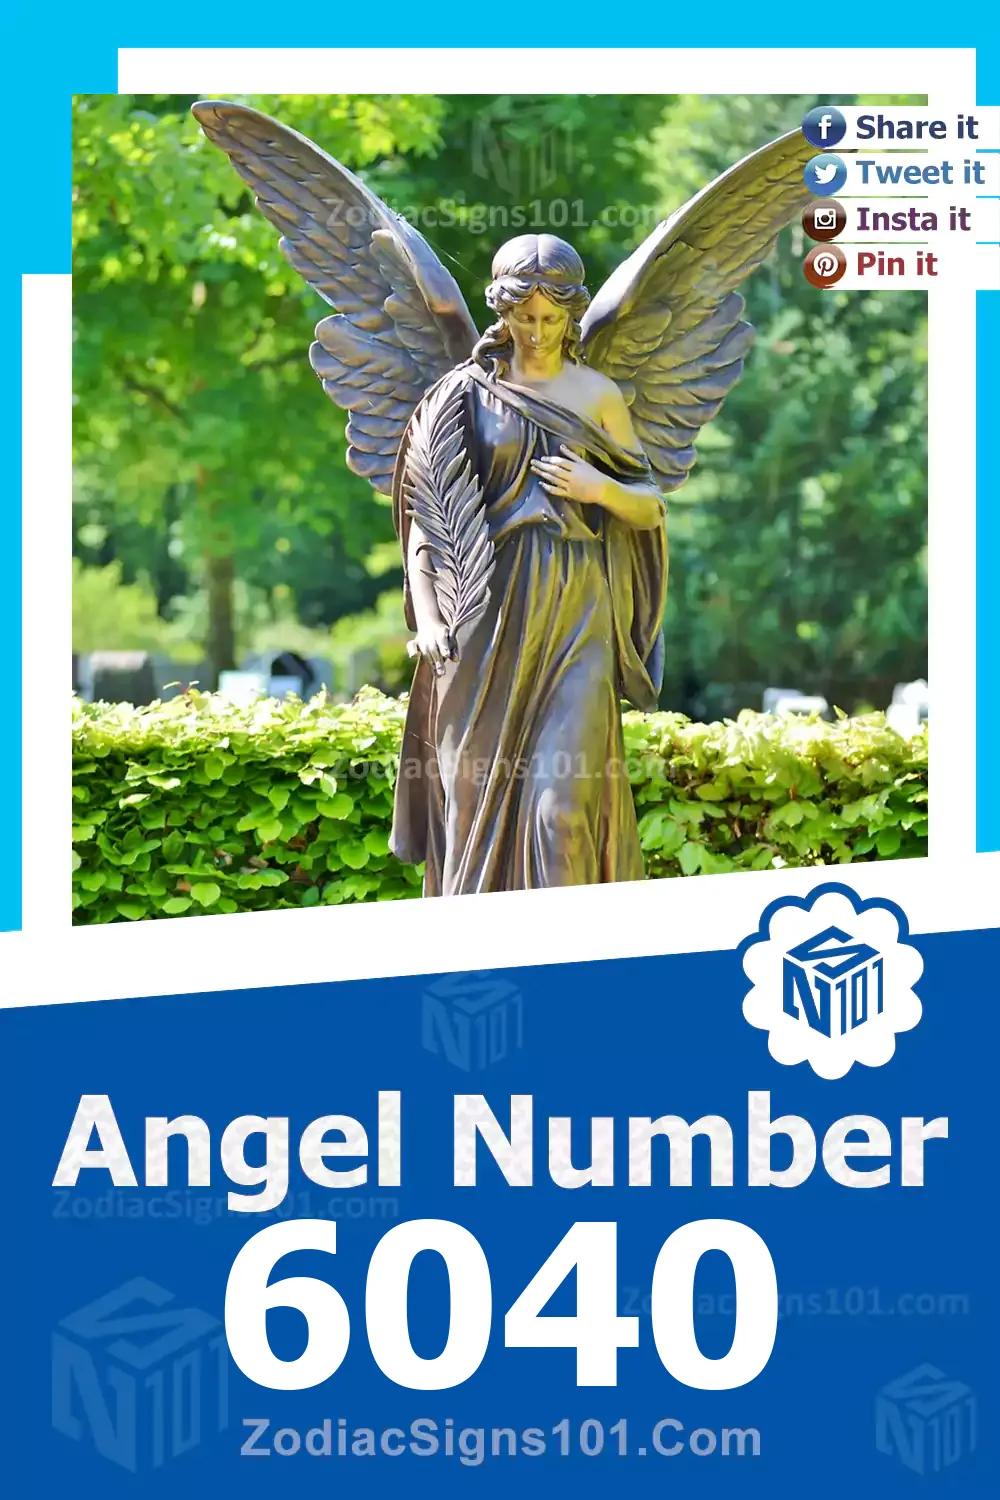 6040-Angel-Number-Meaning.jpg